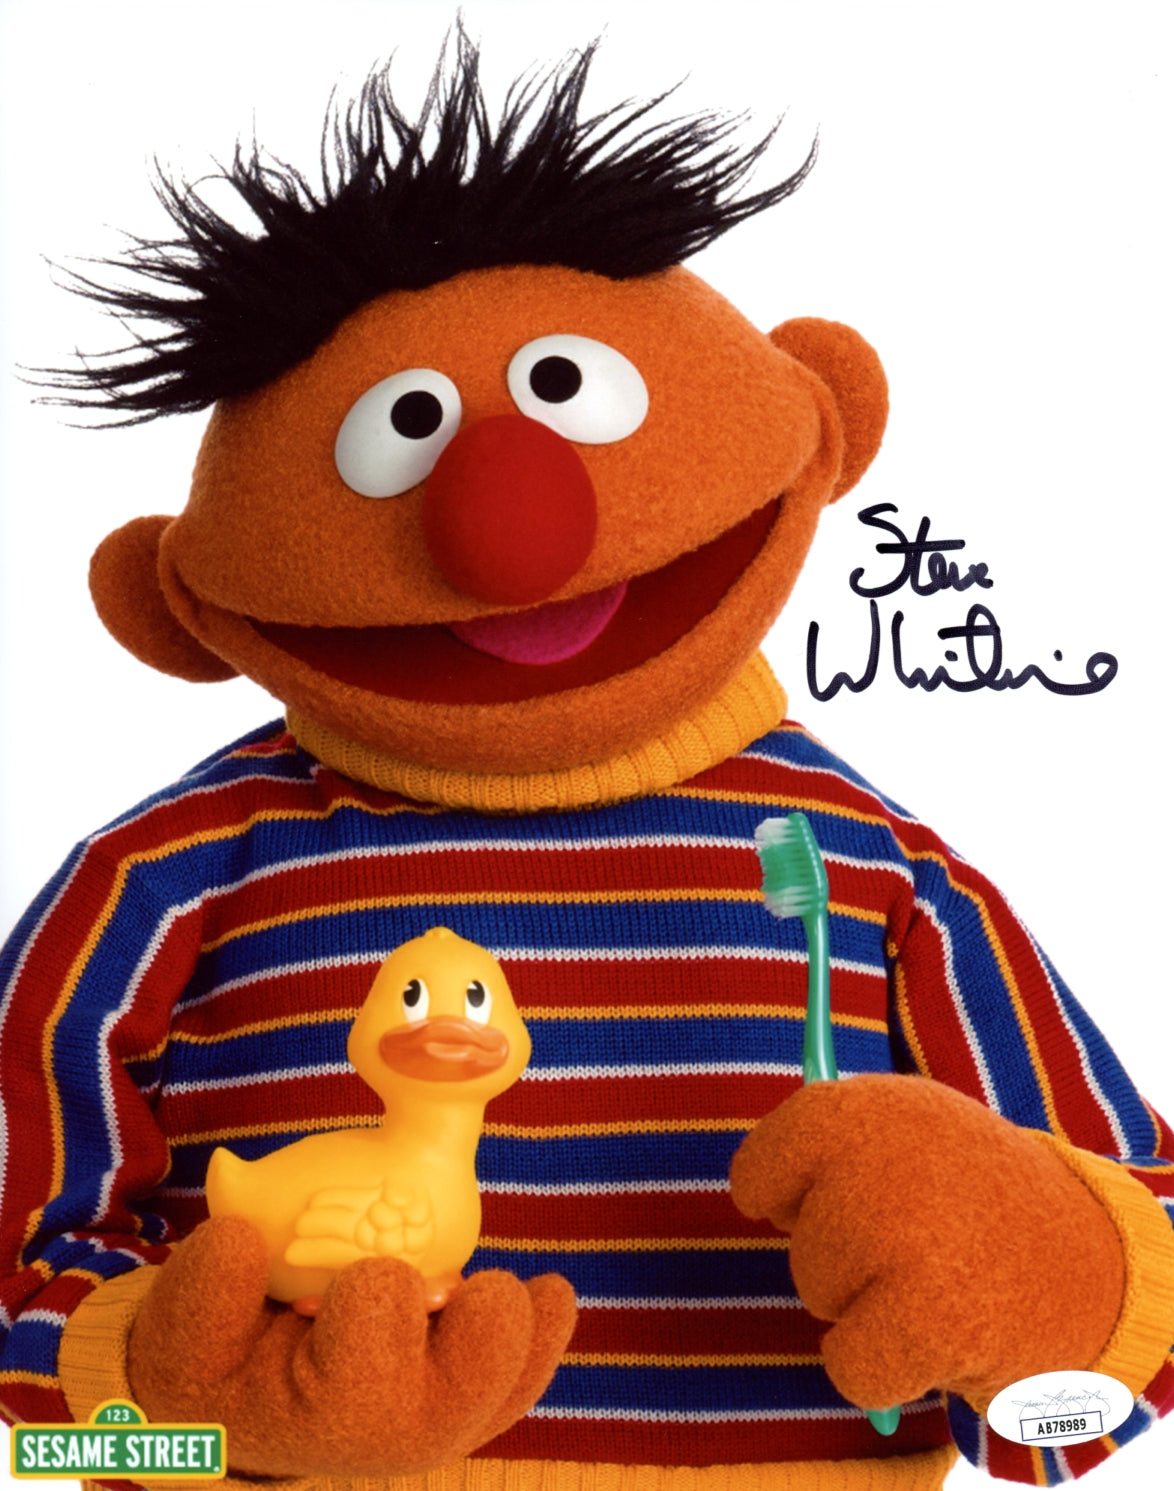 Steve Whitmire Sesame Street 8x10 Signed Photo JSA Certified Autograph